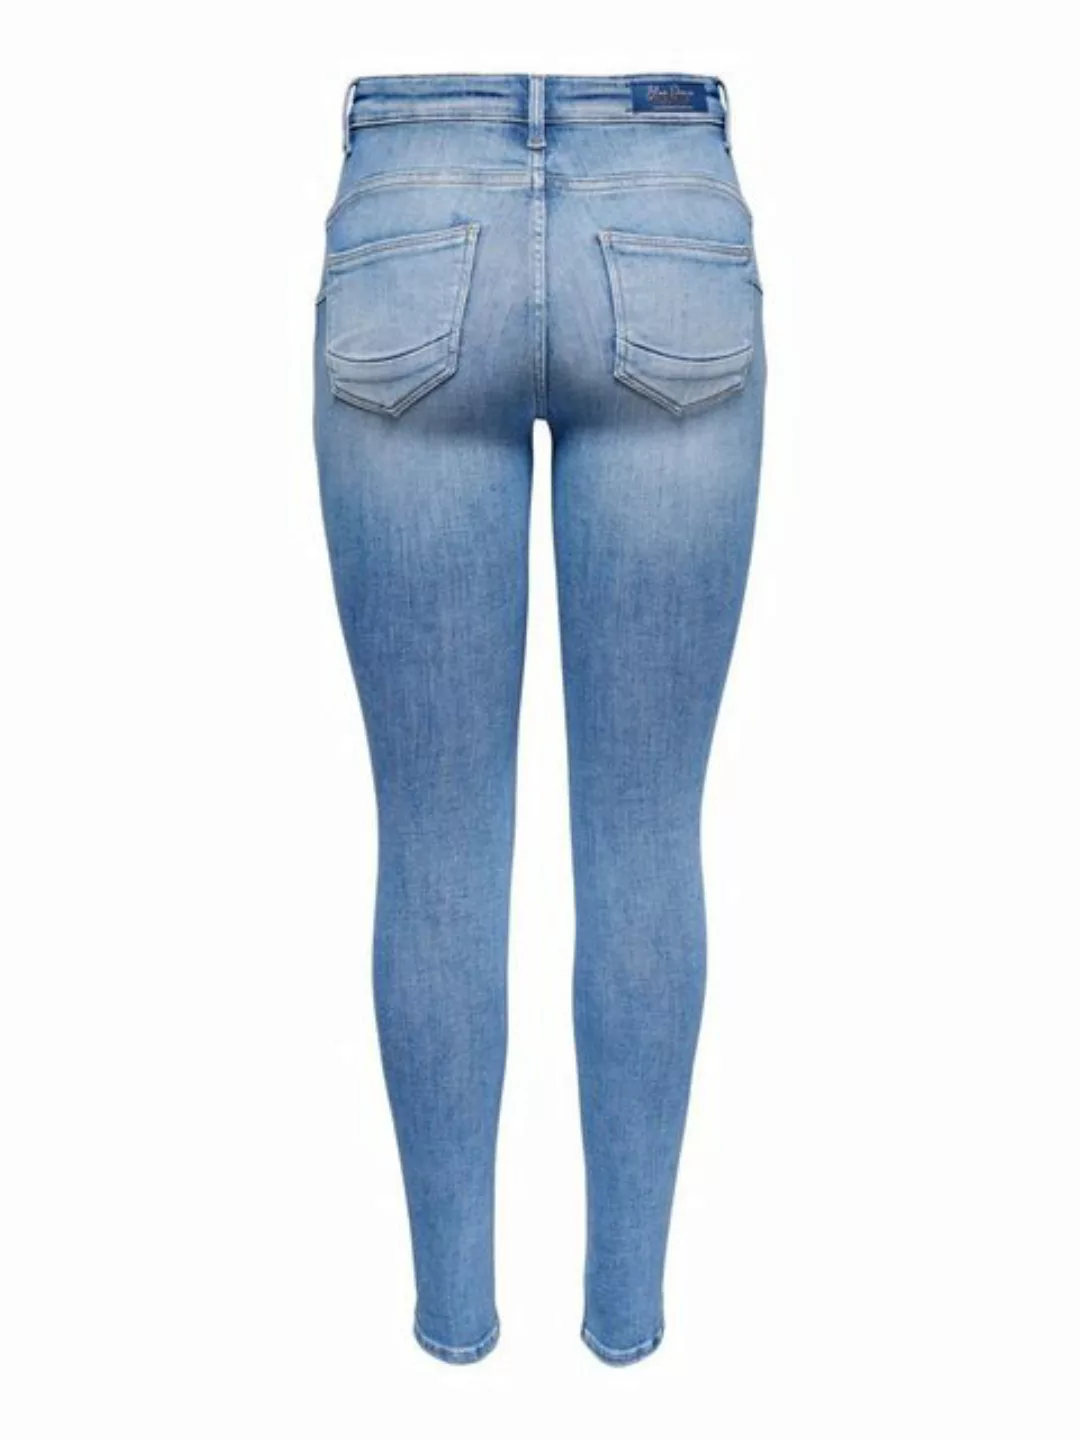 Only Damen Jeans ONLPOWER MID PUSH UP SK DNM REA934 - Skinny Fit - Blau - S günstig online kaufen